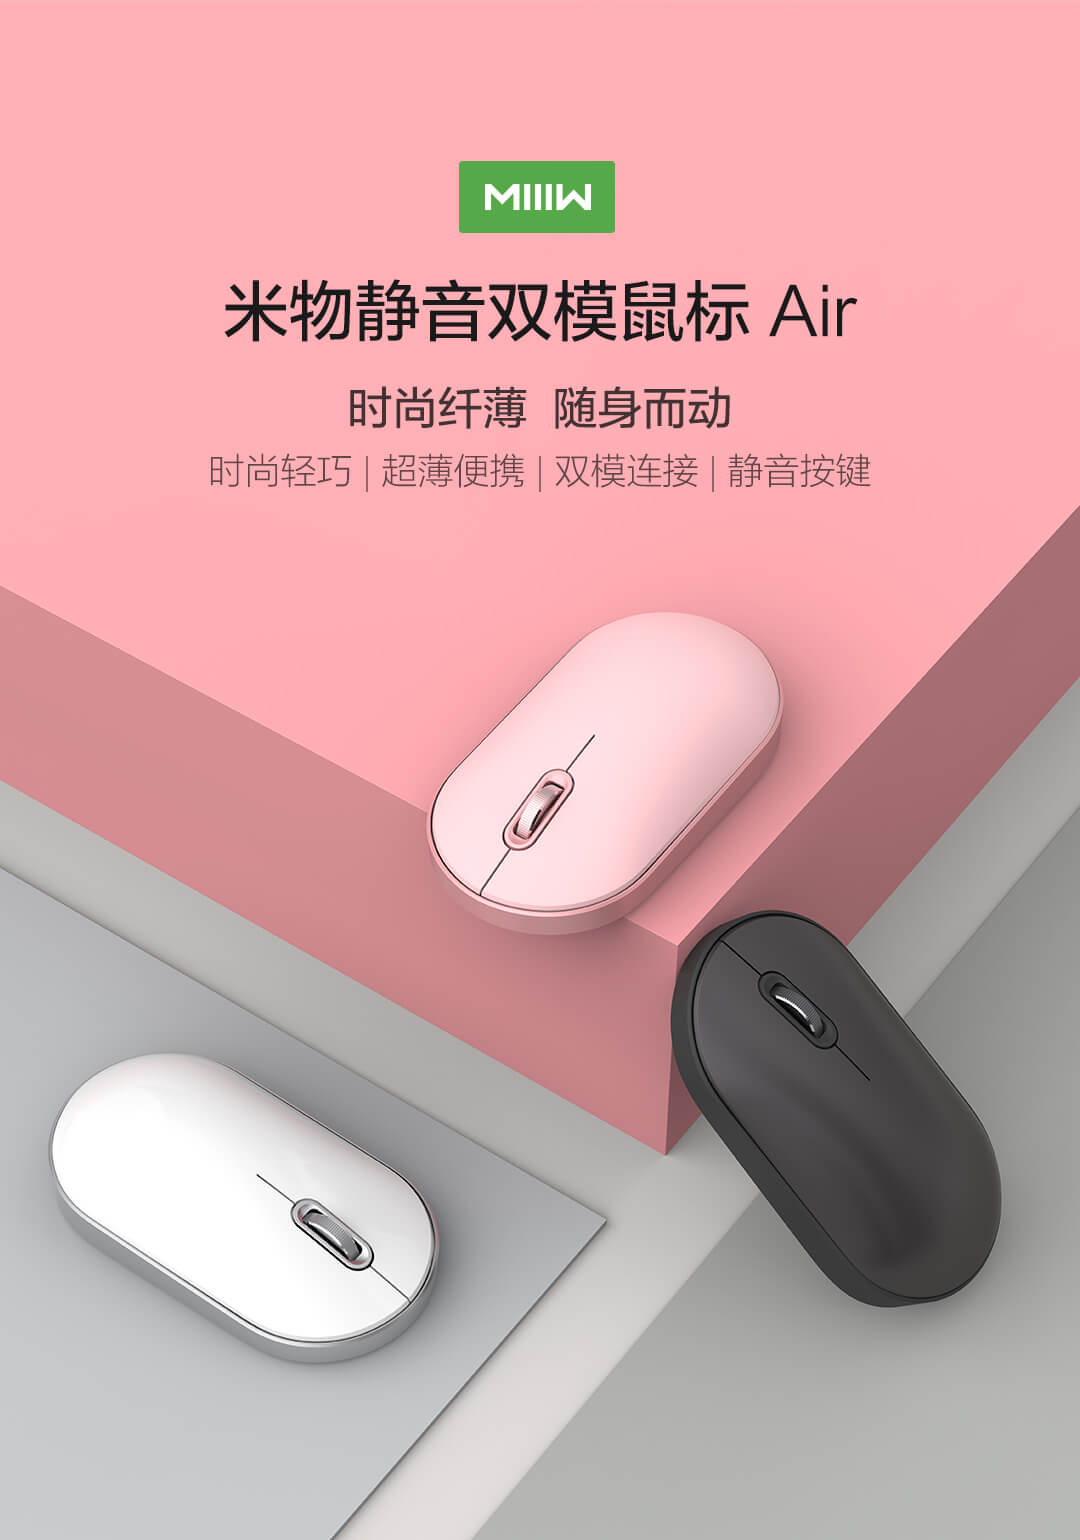 Беспроводная air мышь. Мышь Xiaomi MIIIW Dual Mode Portable. Xiaomi MIIIW Wireless Mute Mouse. Xiaomi MIIIW Portable Mouse Lite mwpm01 серебро. Xiaomi Dual Mode Wireless Mouse.